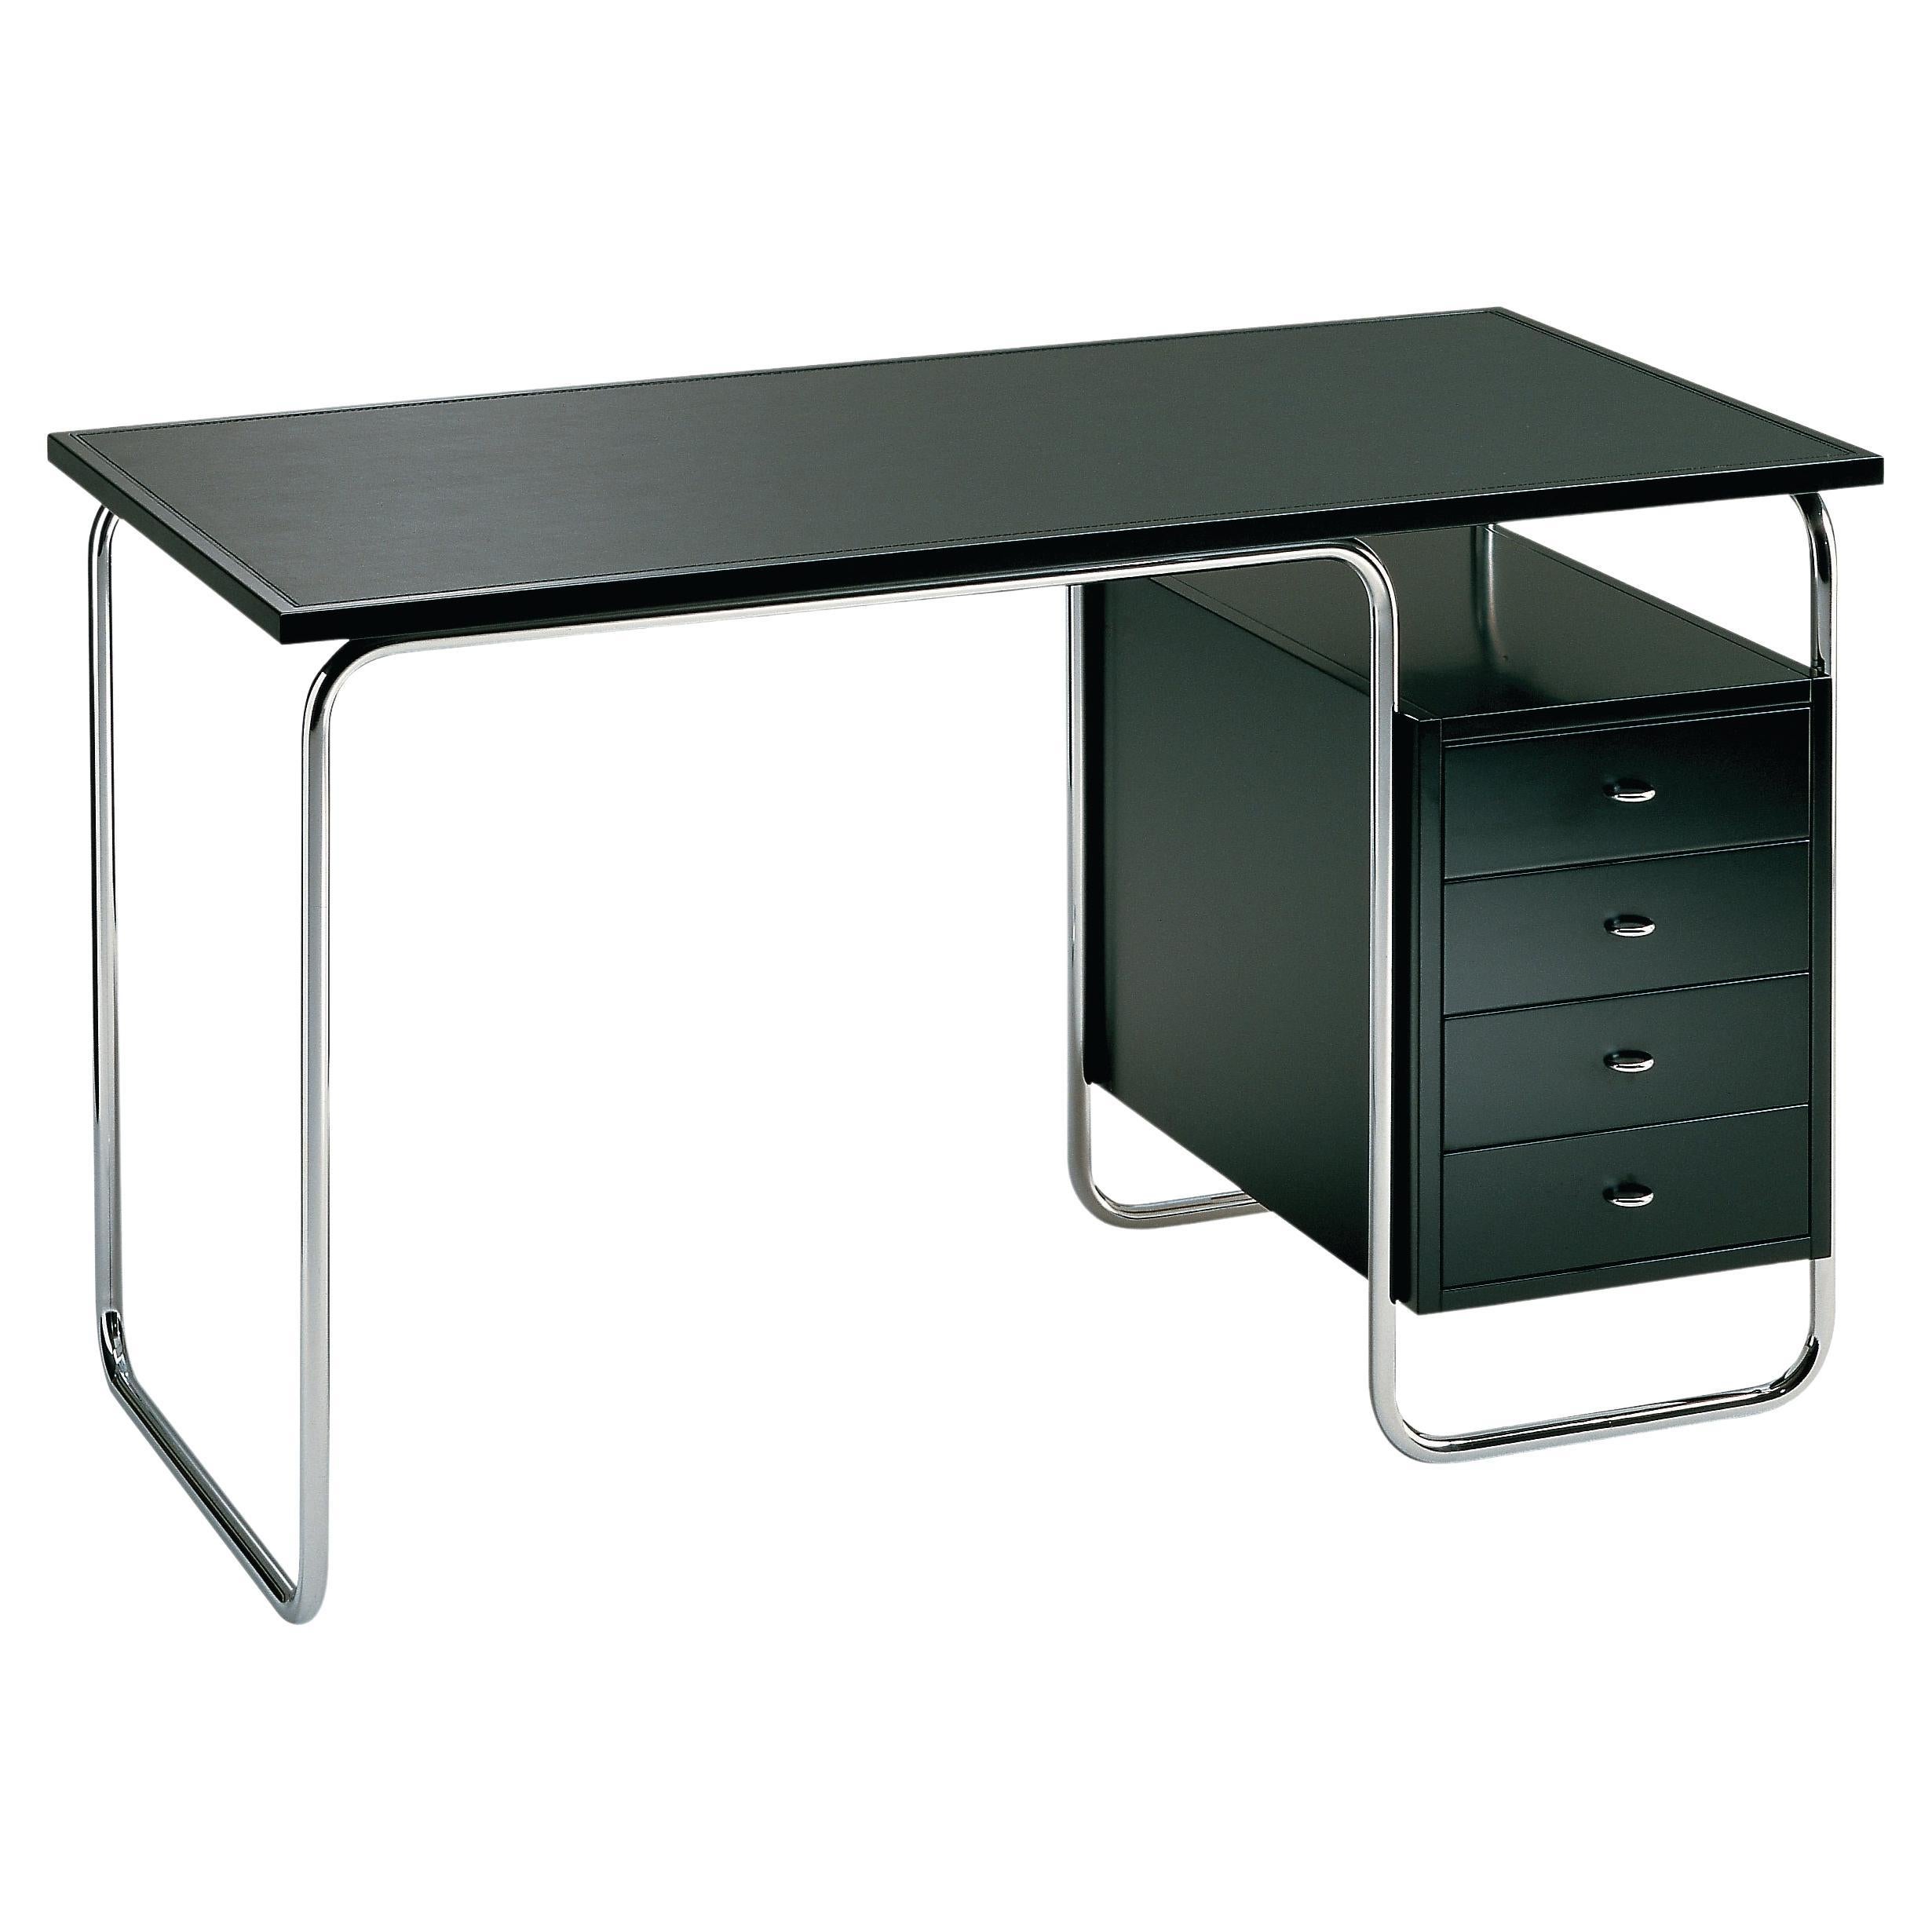 Zanotta Comacina Writing Desk in Black Top & Stainless Steel Frame,Piero Bottoni